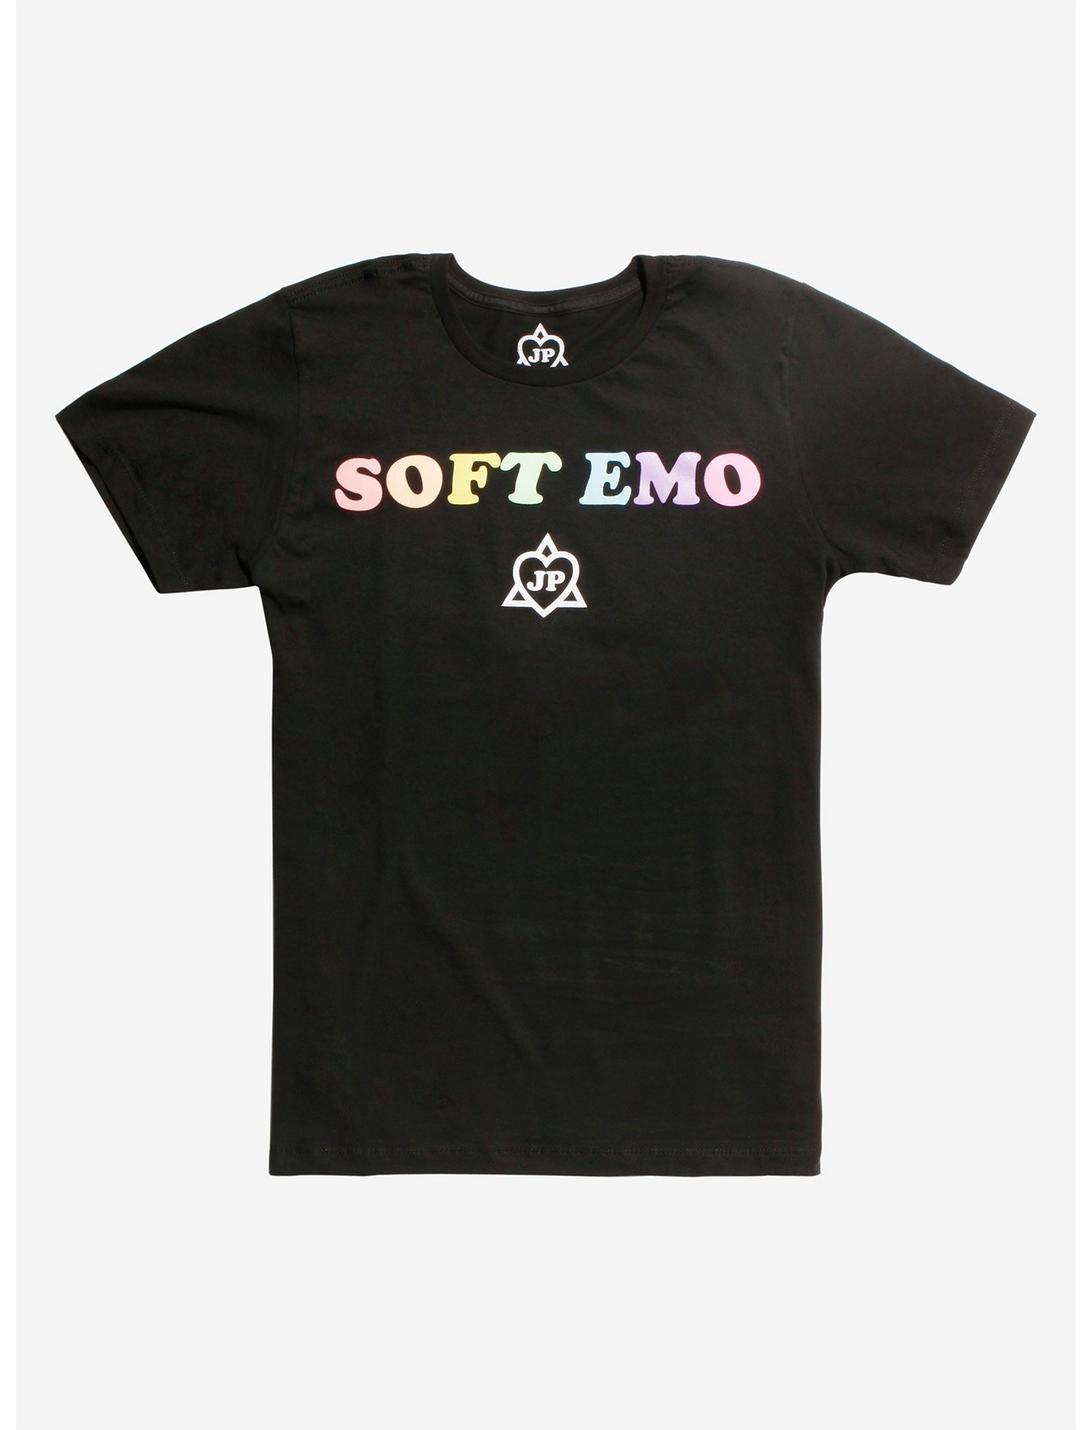 Jessie Paege Soft Emo T-Shirt Hot Topic Exclusive, BLACK, hi-res